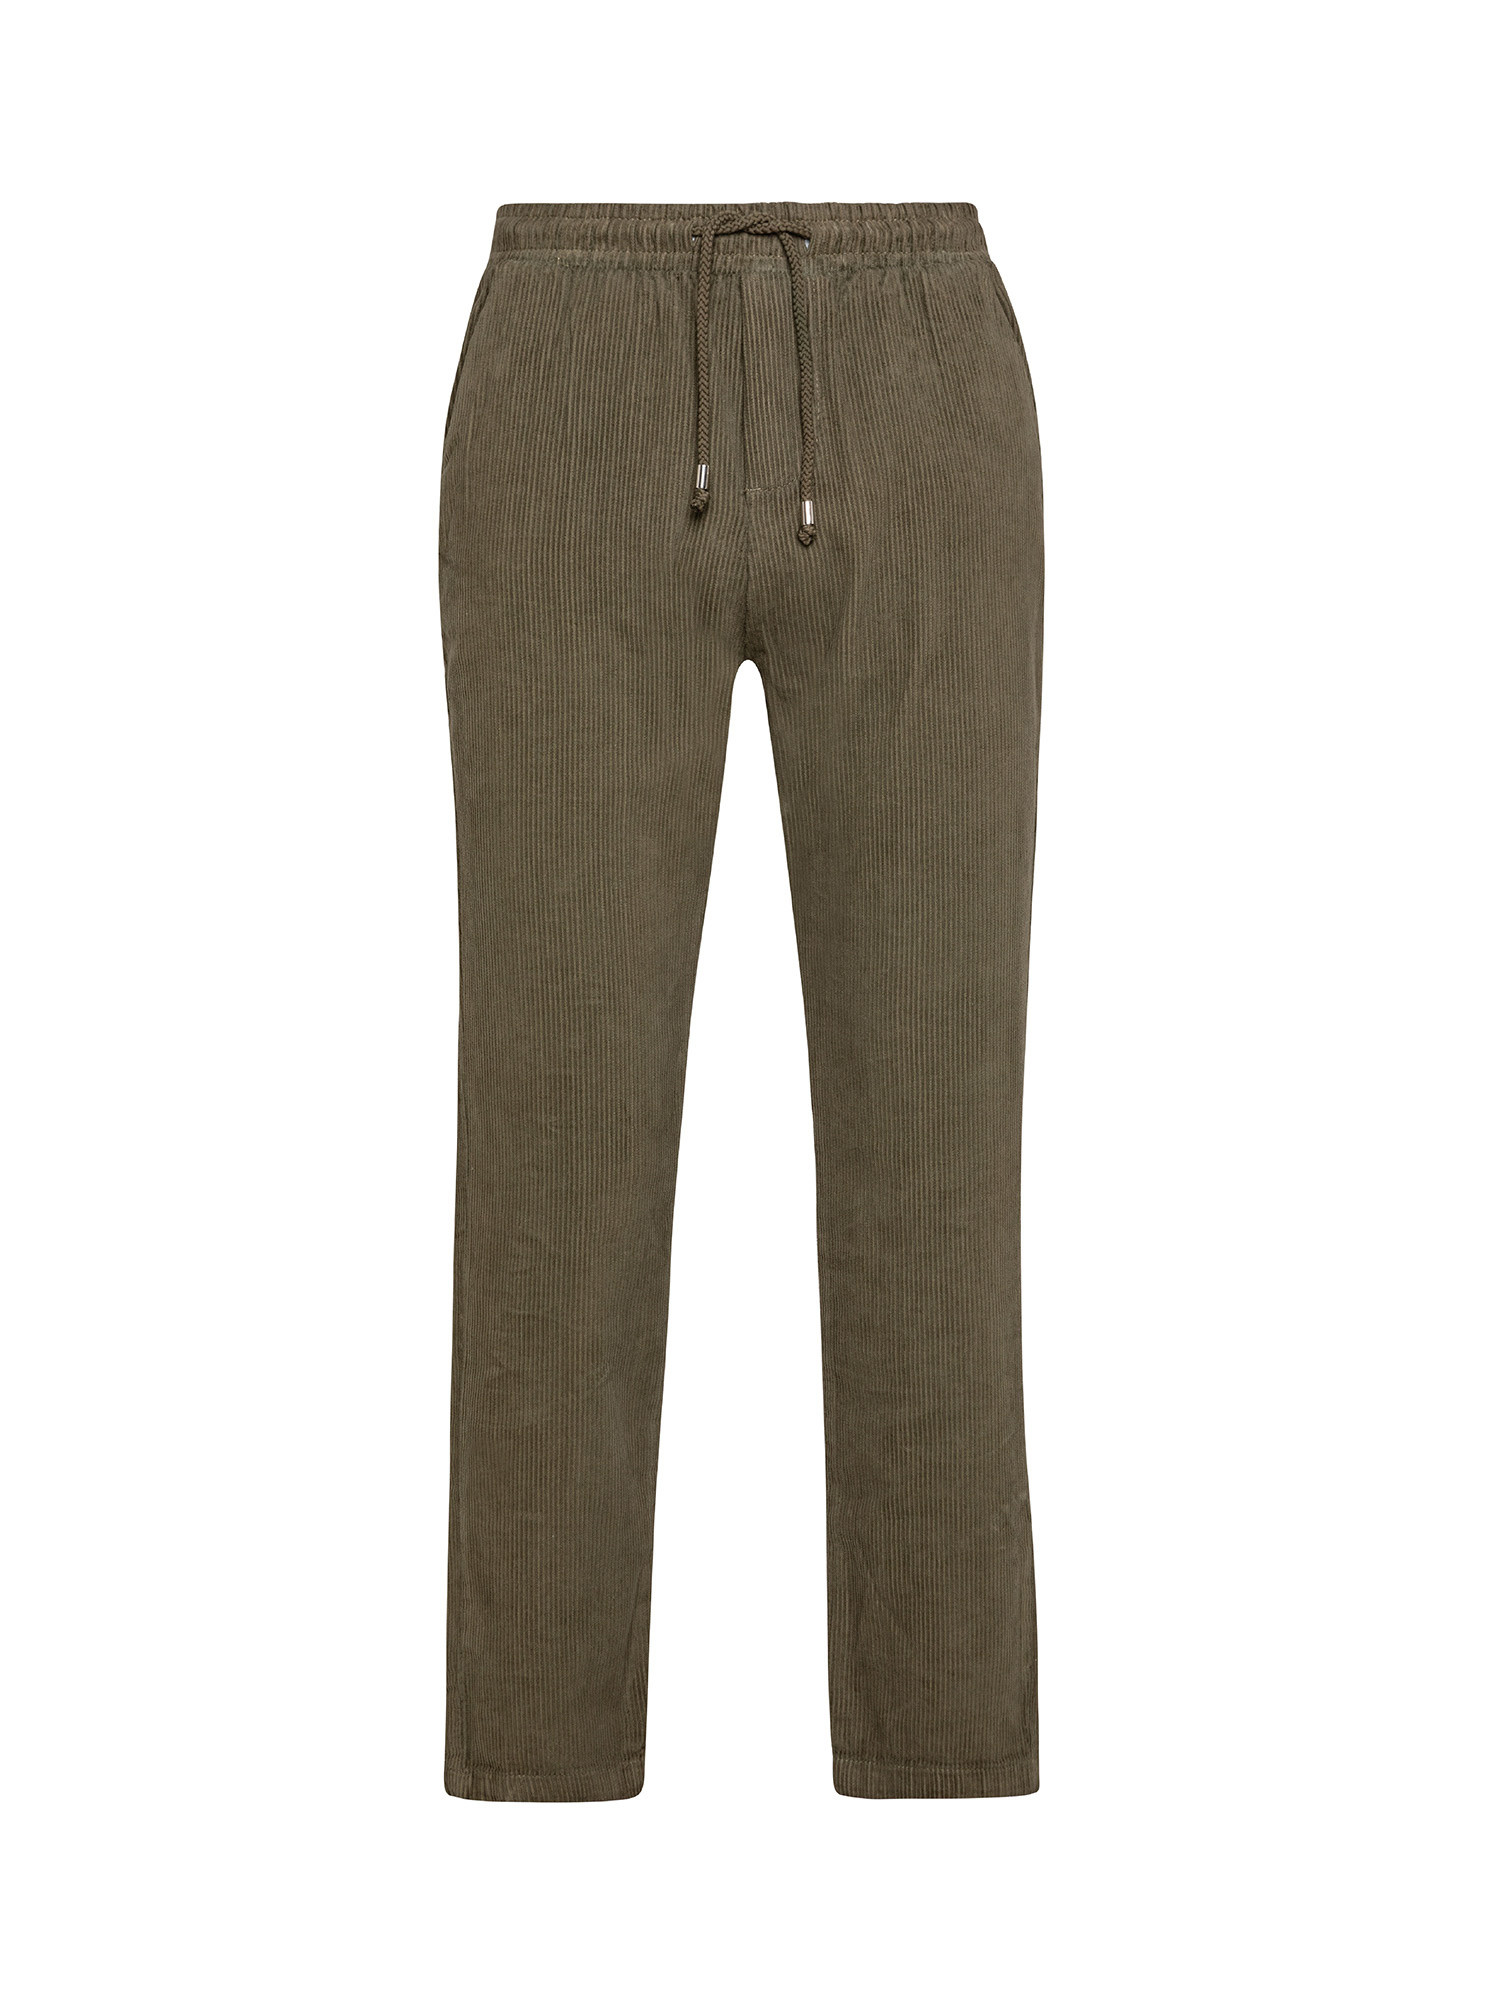 JCT - Velvet trousers, Olive Green, large image number 0